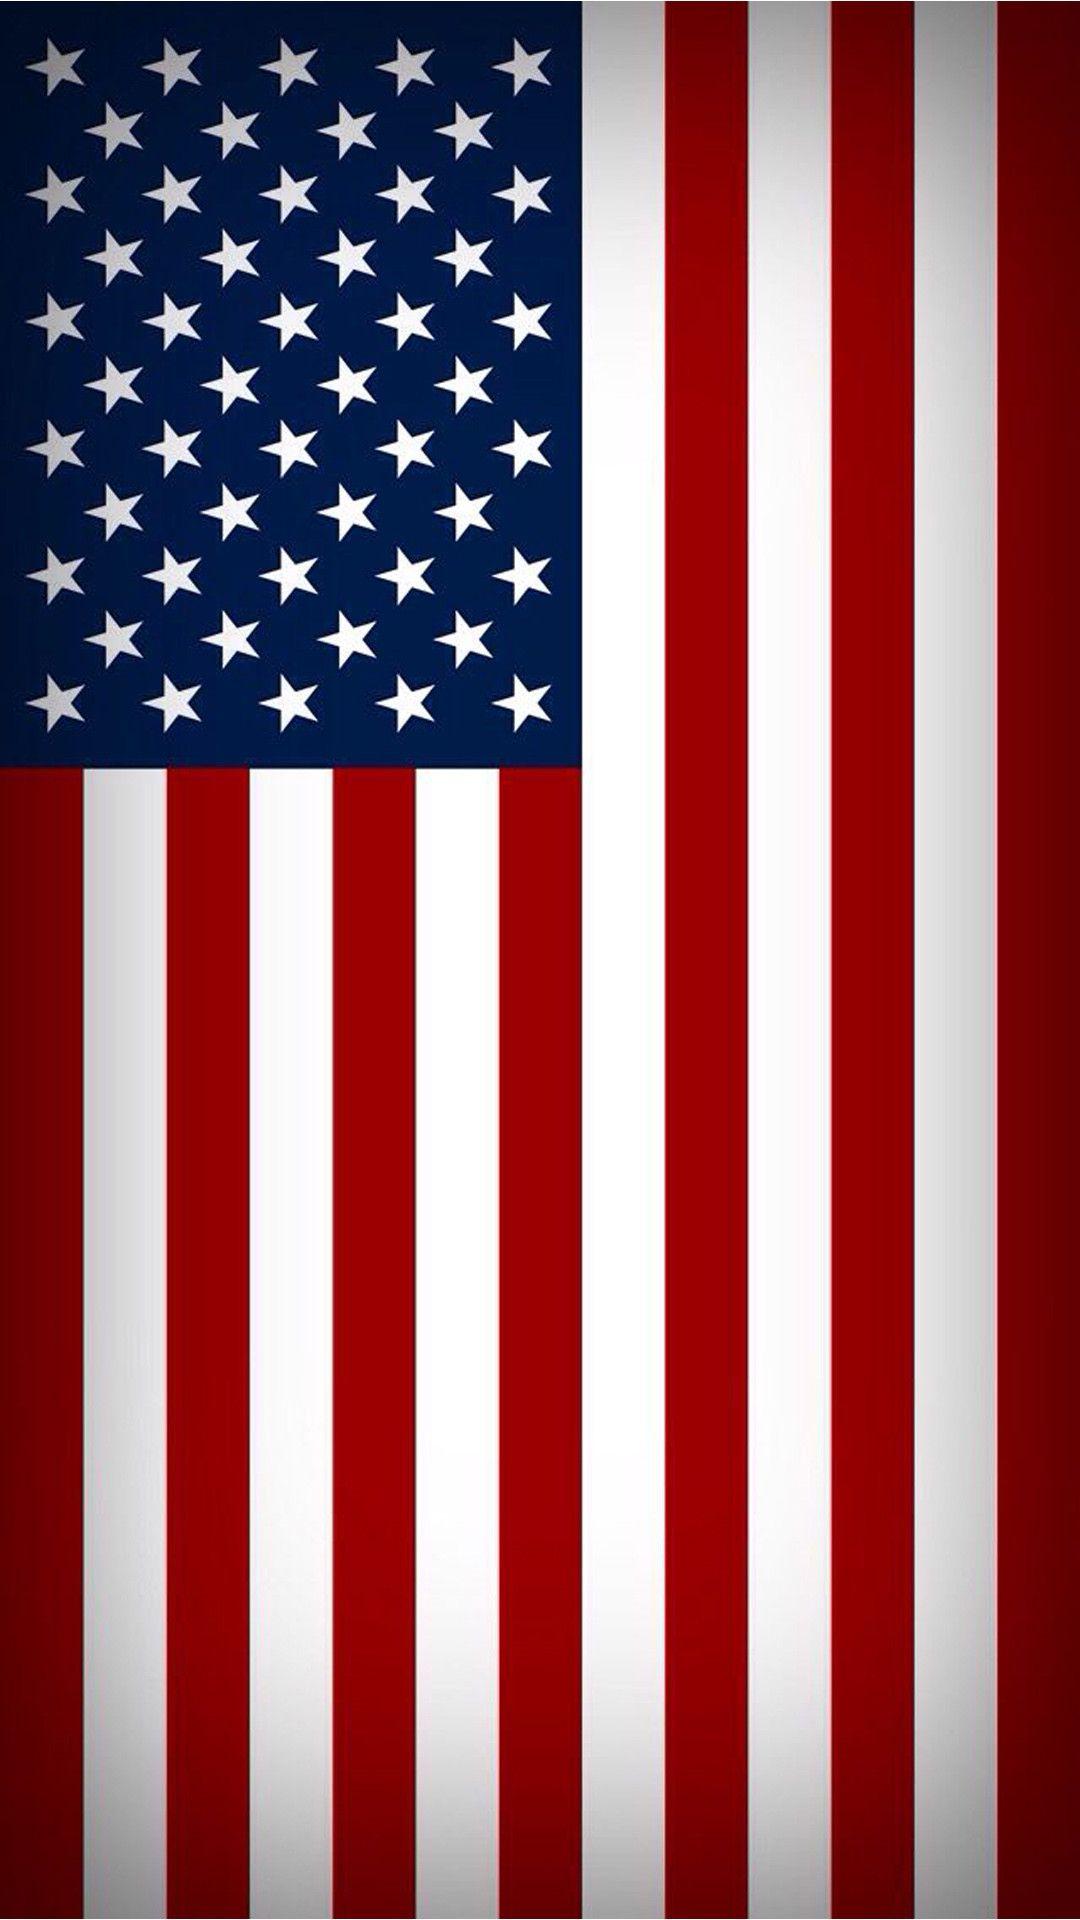 American Flag Wallpaper iPhone 6. American flag wallpaper iphone, American flag wallpaper, Usa flag wallpaper